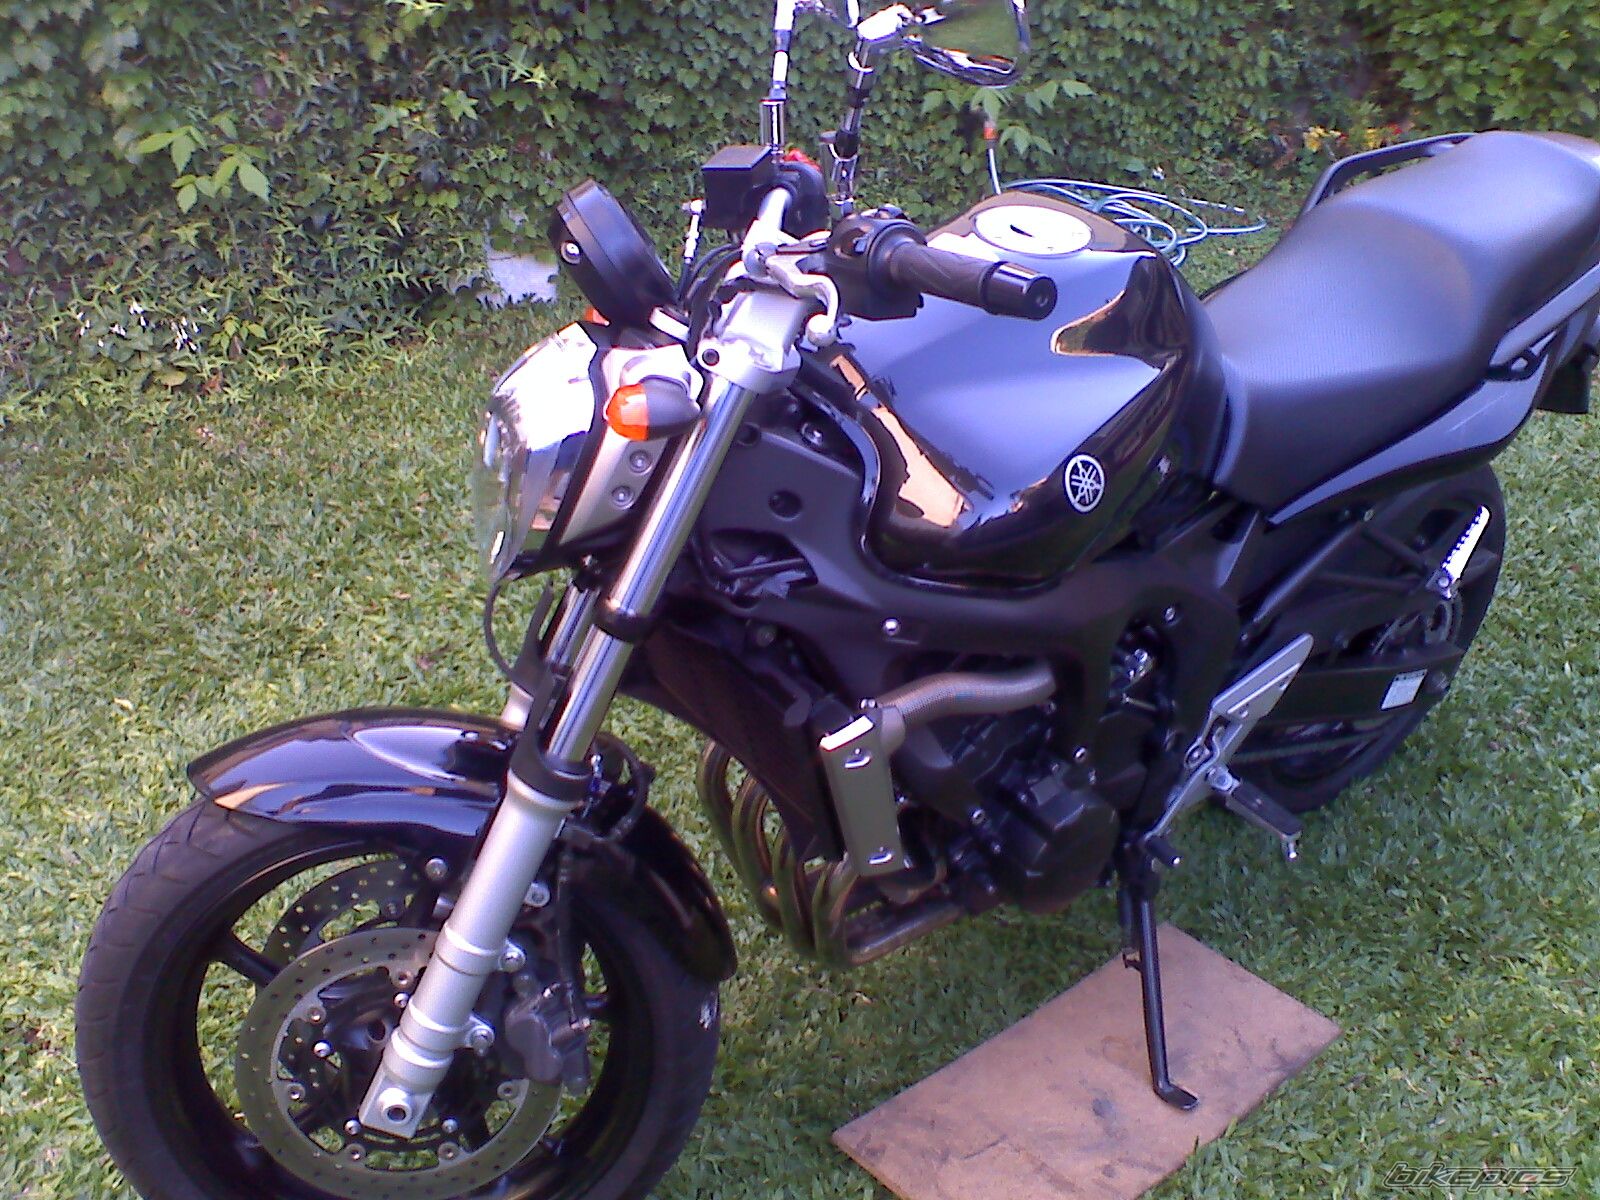 Тест-драйв мотоцикла Suzuki GSR 600